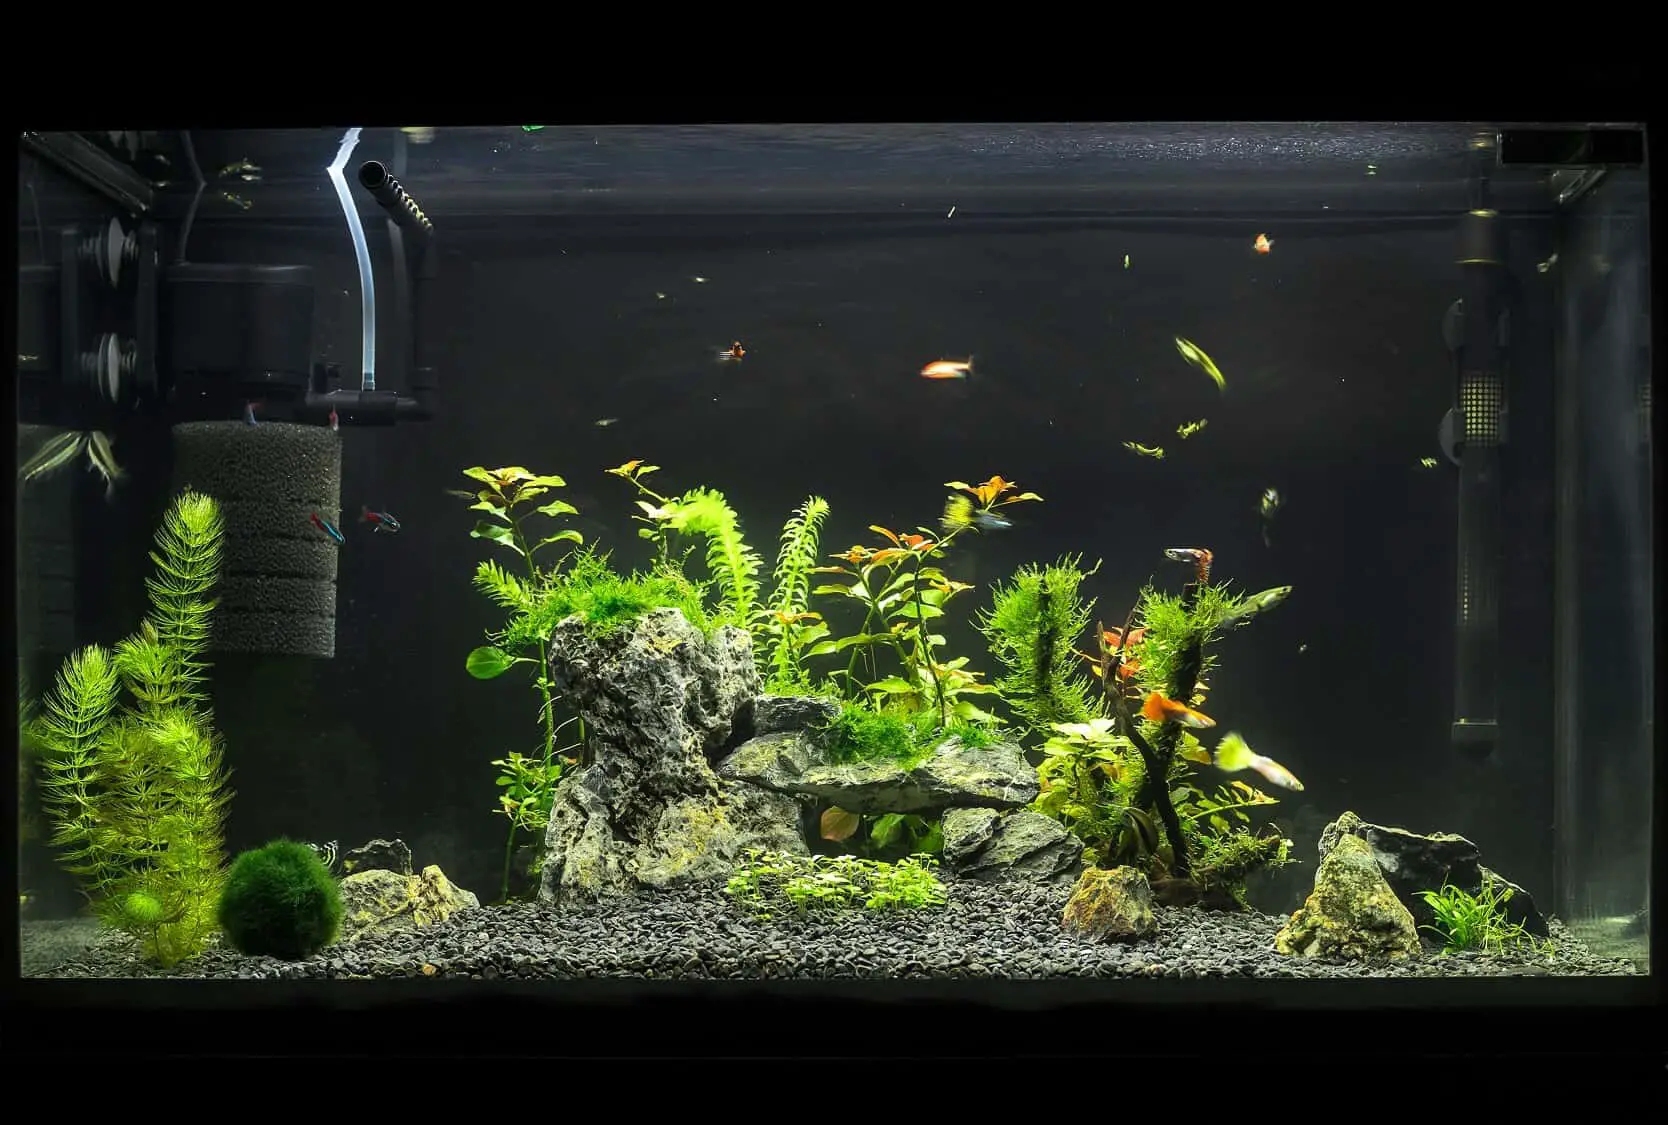 best filter for 75 gallon freshwater aquarium